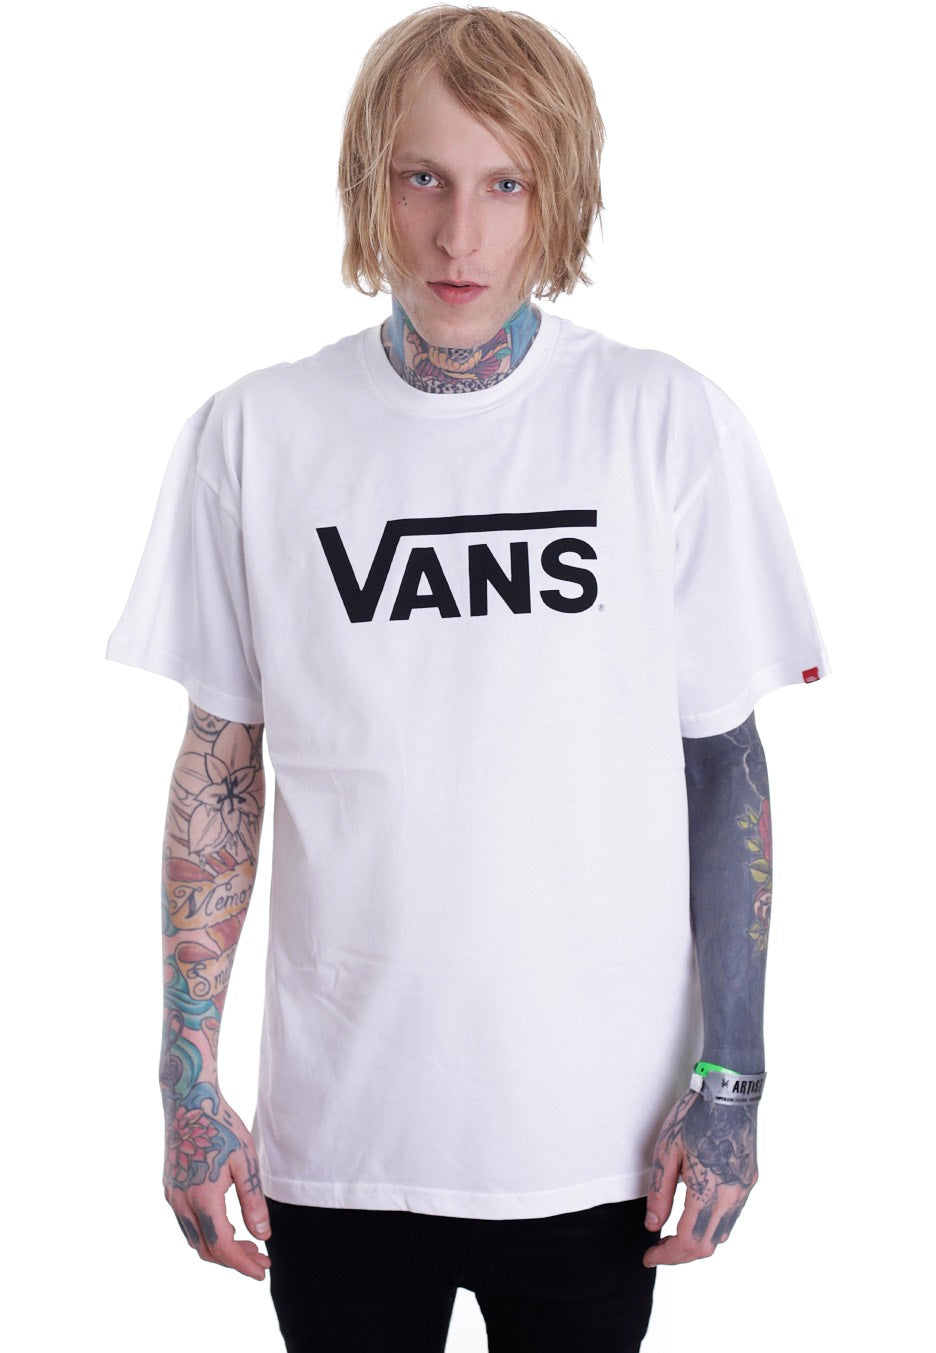 Vans - Vans Classic White/Black - T-Shirt | Men-Image